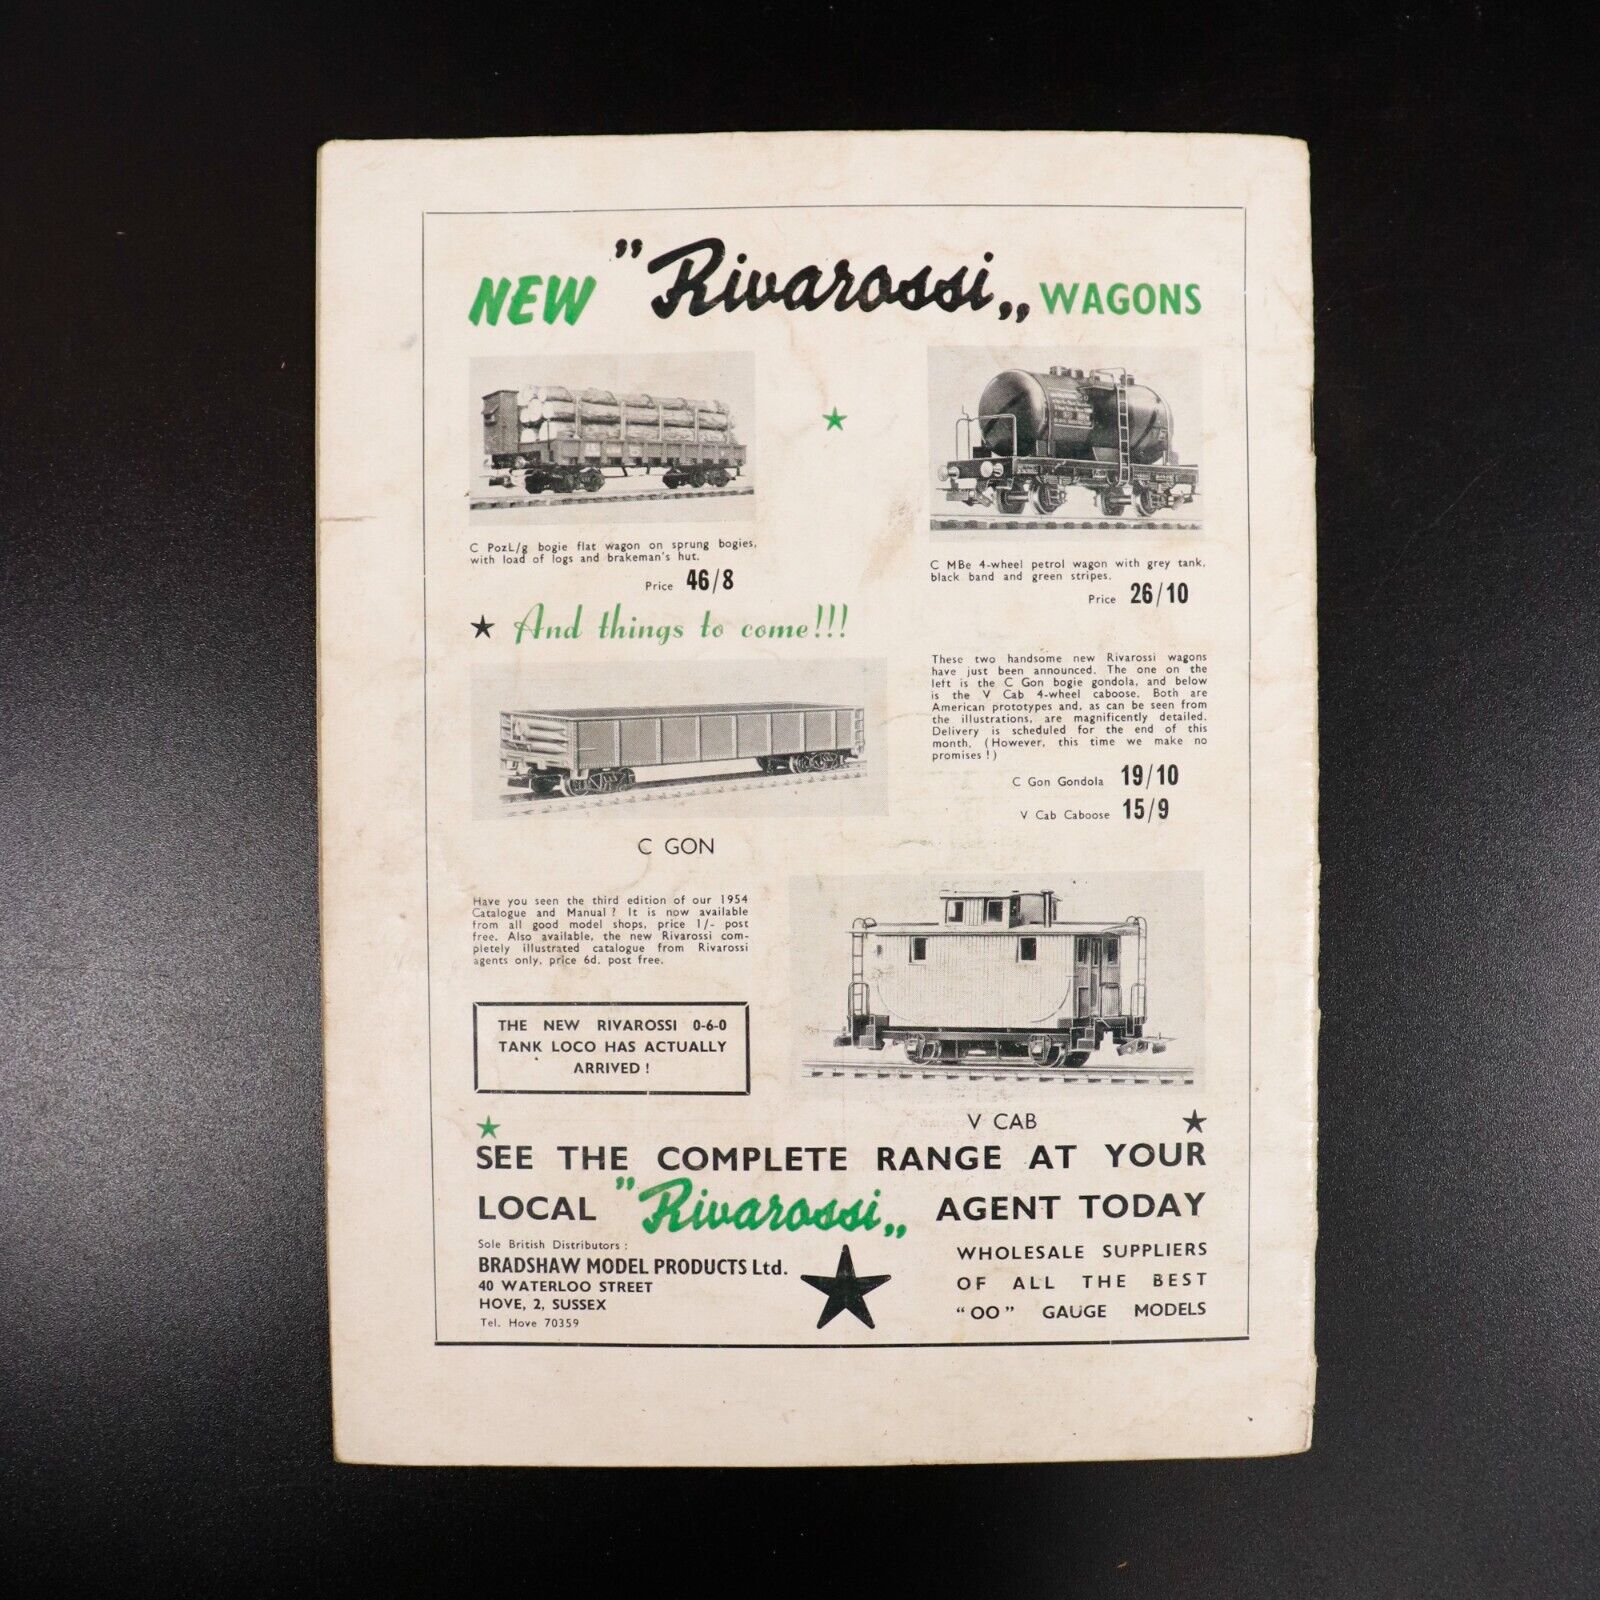 c1954 5vol Railway Modeller For The Average Enthusiast Magazine Railway Books